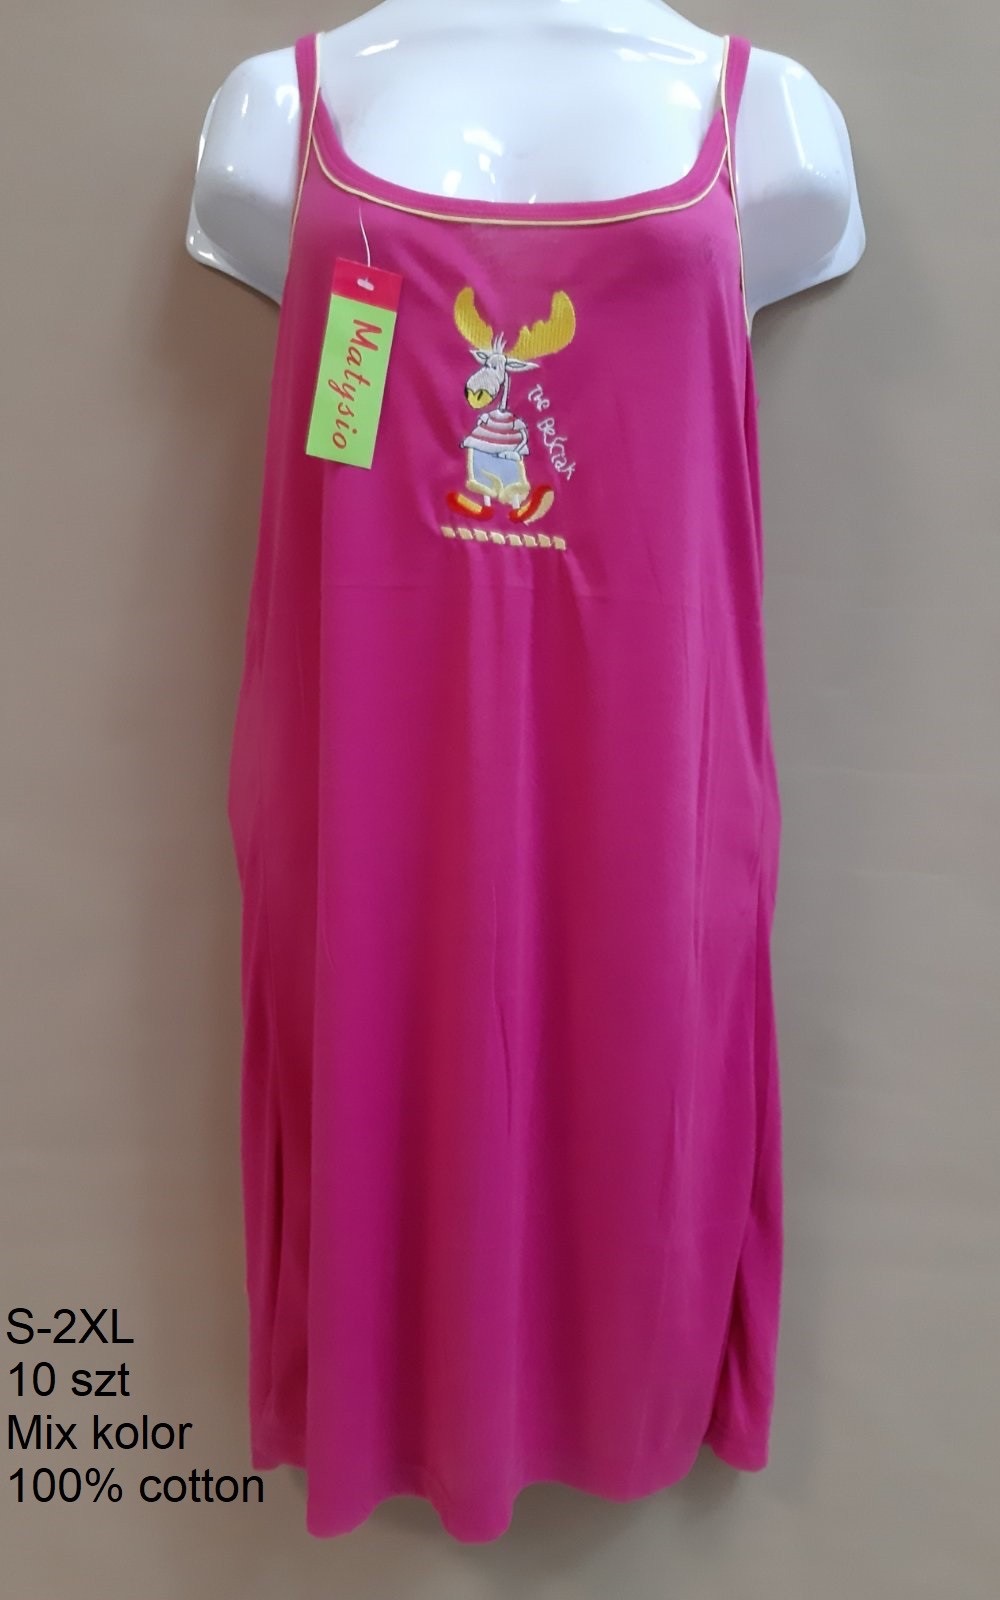 Koszula nocna damska ( VietNam product ) Roz S-2XL, Mix kolor Paczka 10 szt